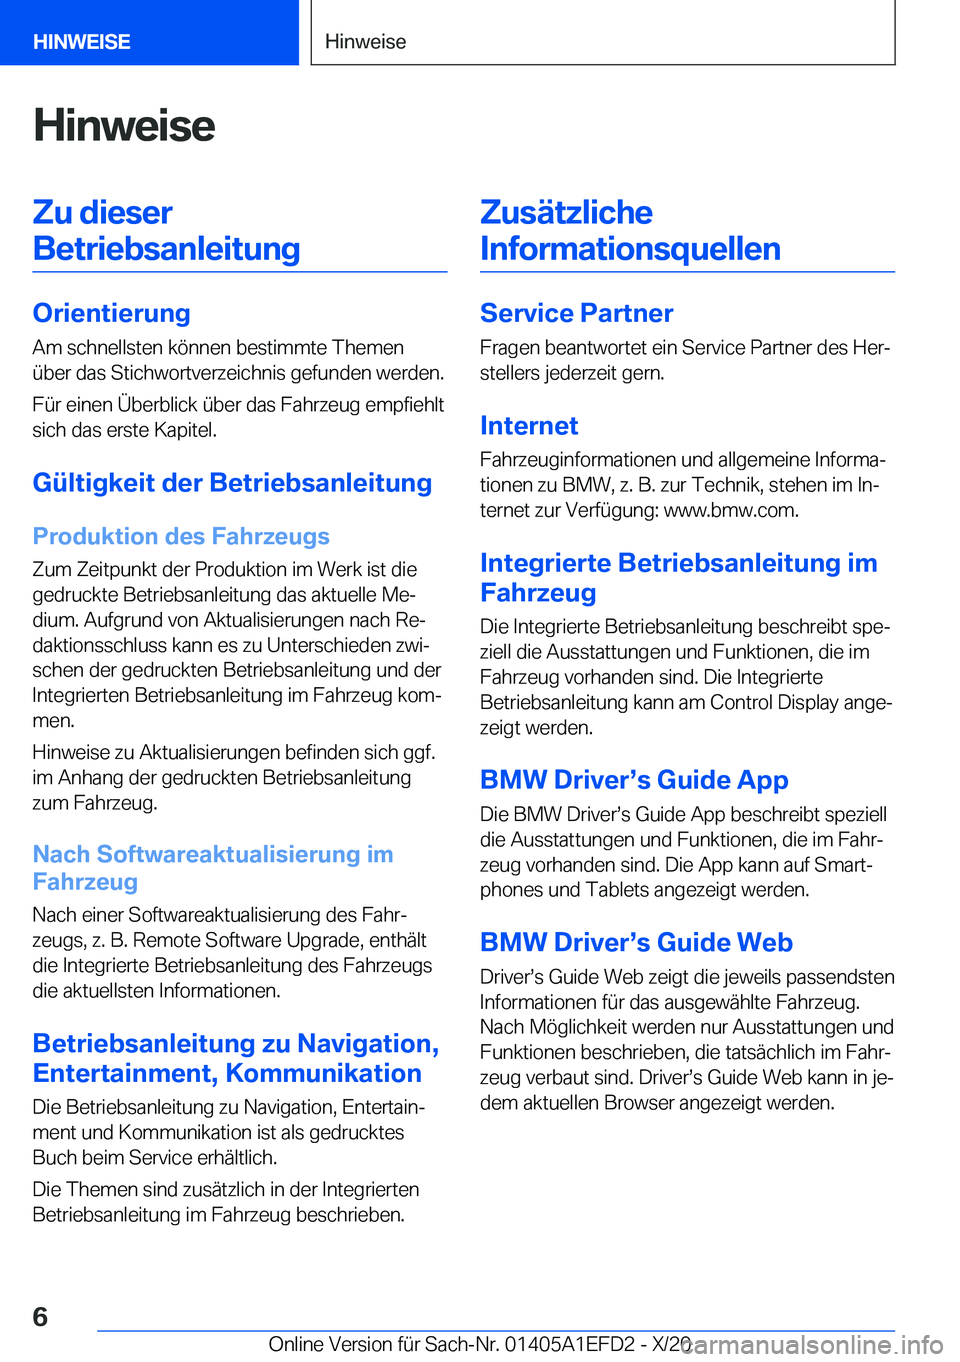 BMW X7 2021  Betriebsanleitungen (in German) �H�i�n�w�e�i�s�e�Z�u��d�i�e�s�e�r�B�e�t�r�i�e�b�s�a�n�l�e�i�t�u�n�g
�O�r�i�e�n�t�i�e�r�u�n�g �A�m��s�c�h�n�e�l�l�s�t�e�n��k�